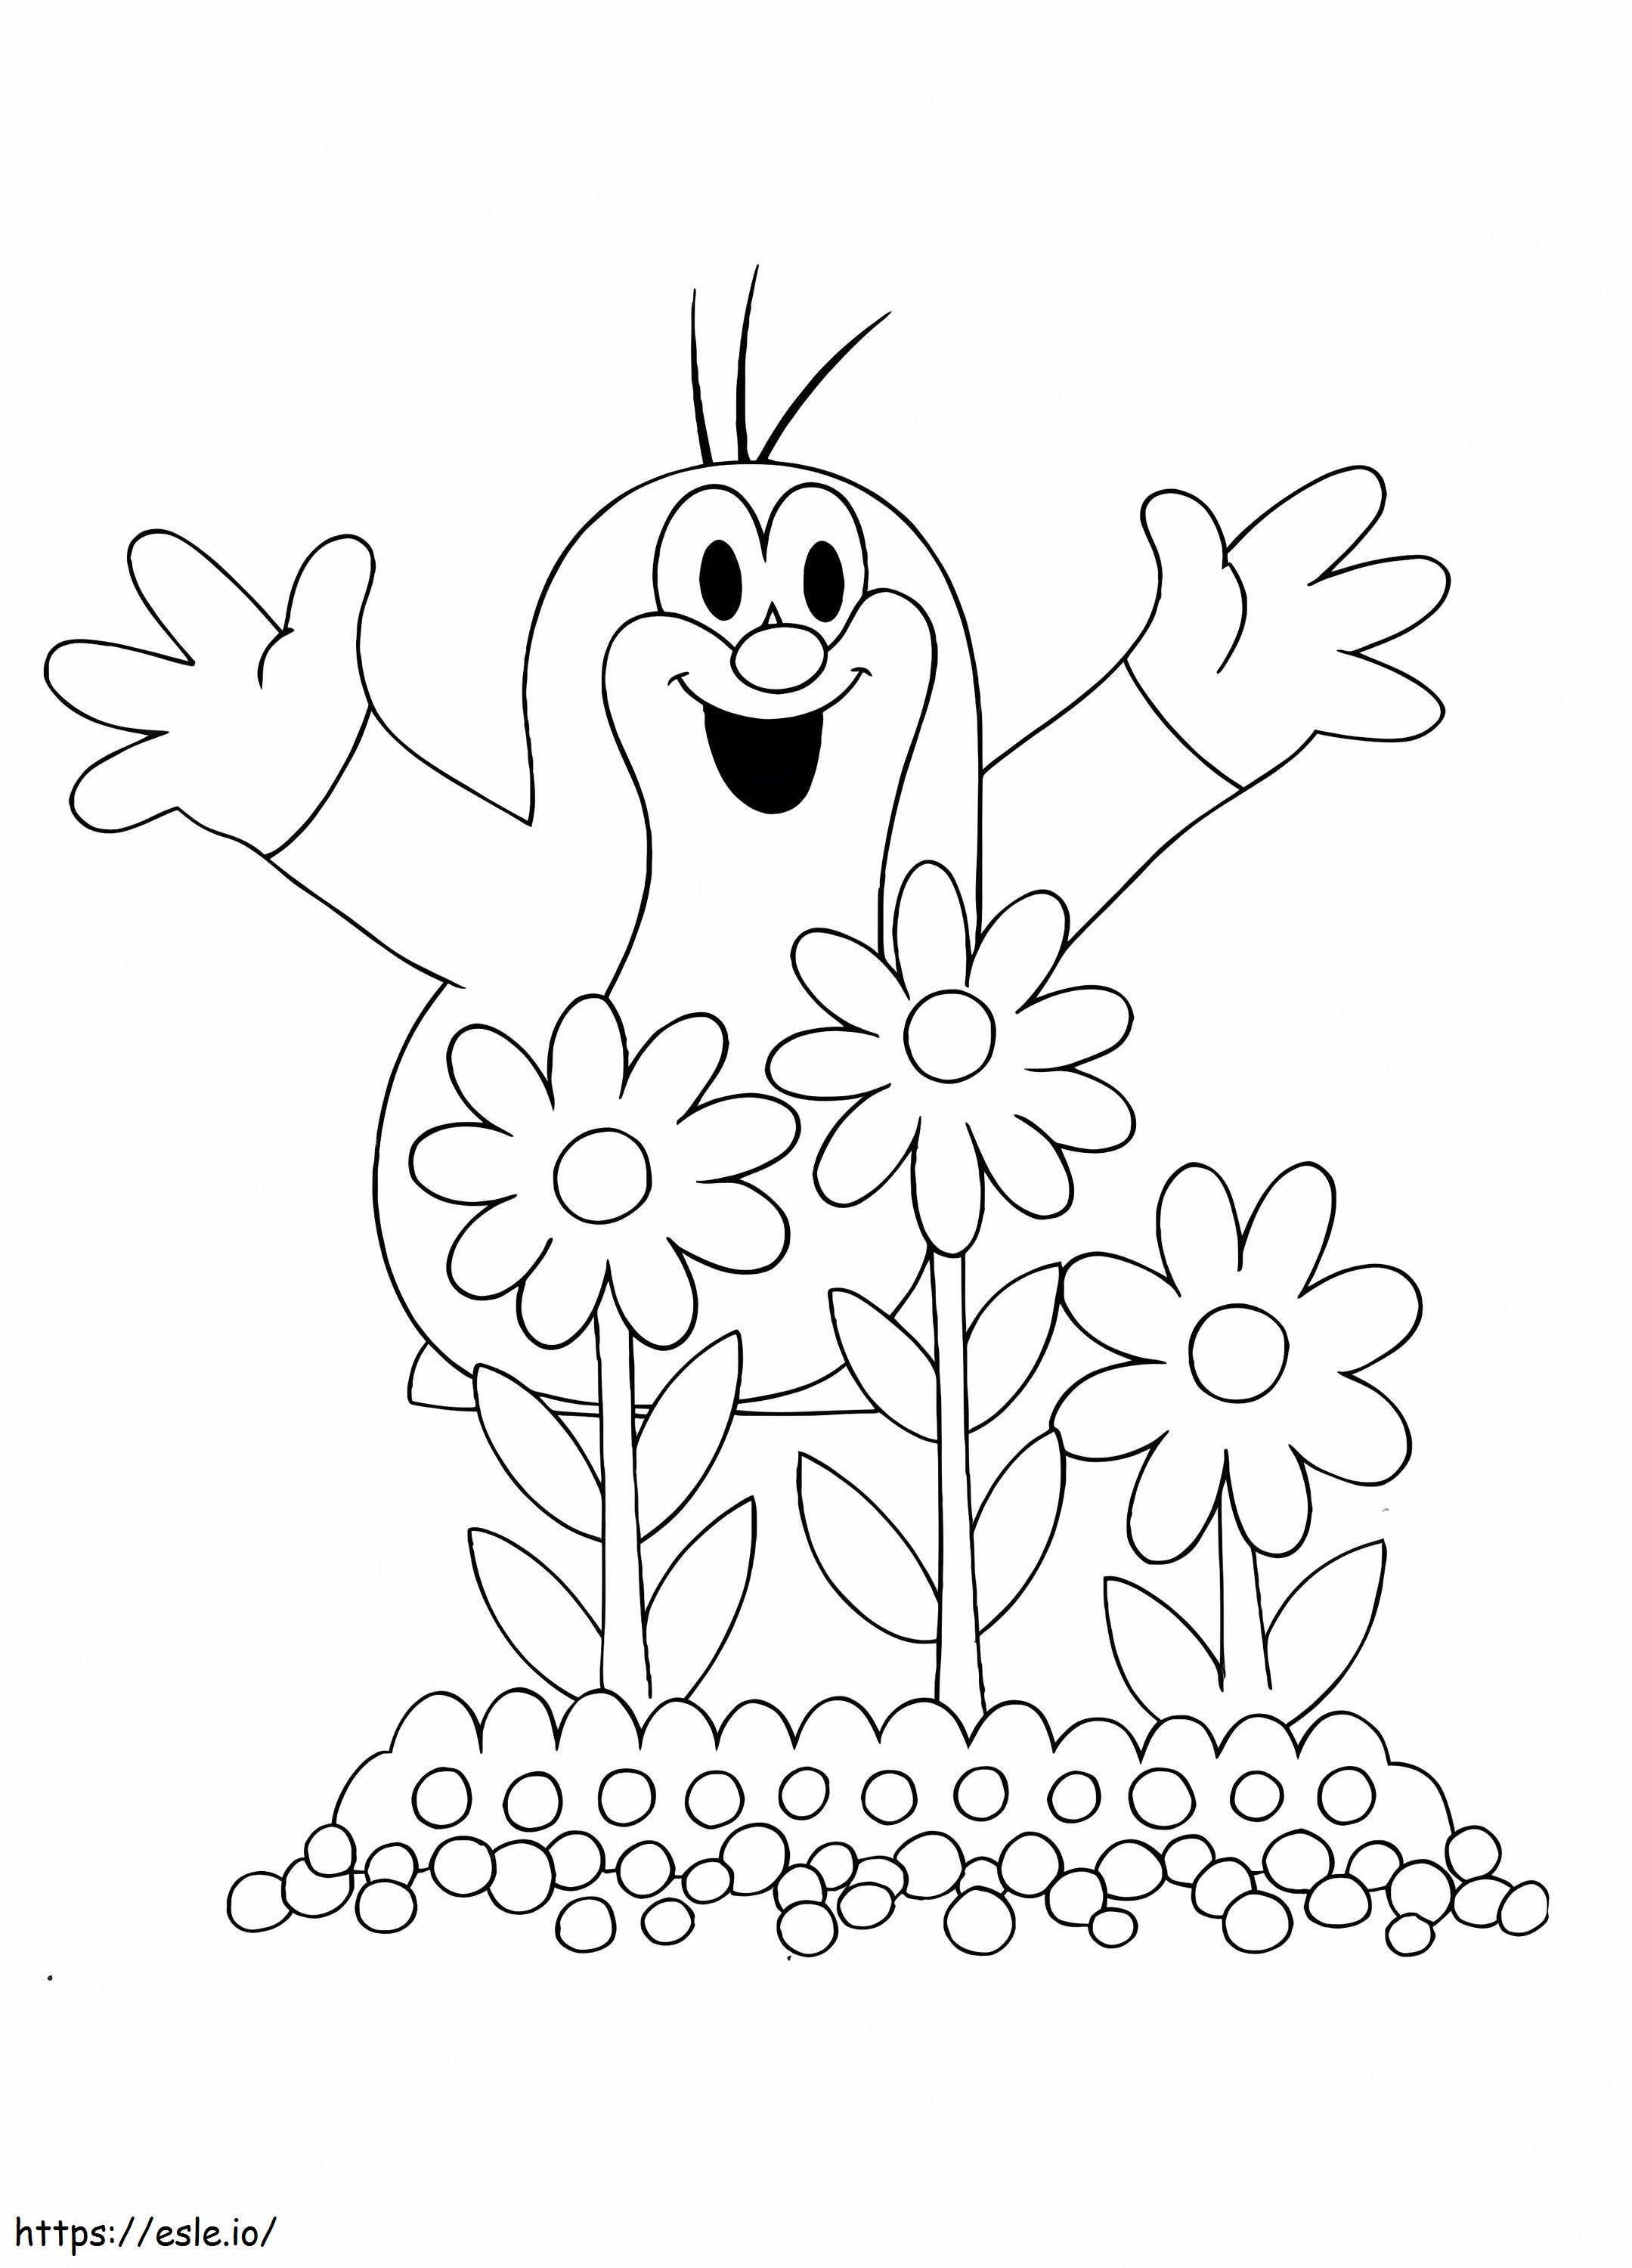 Krtek And Flowers coloring page